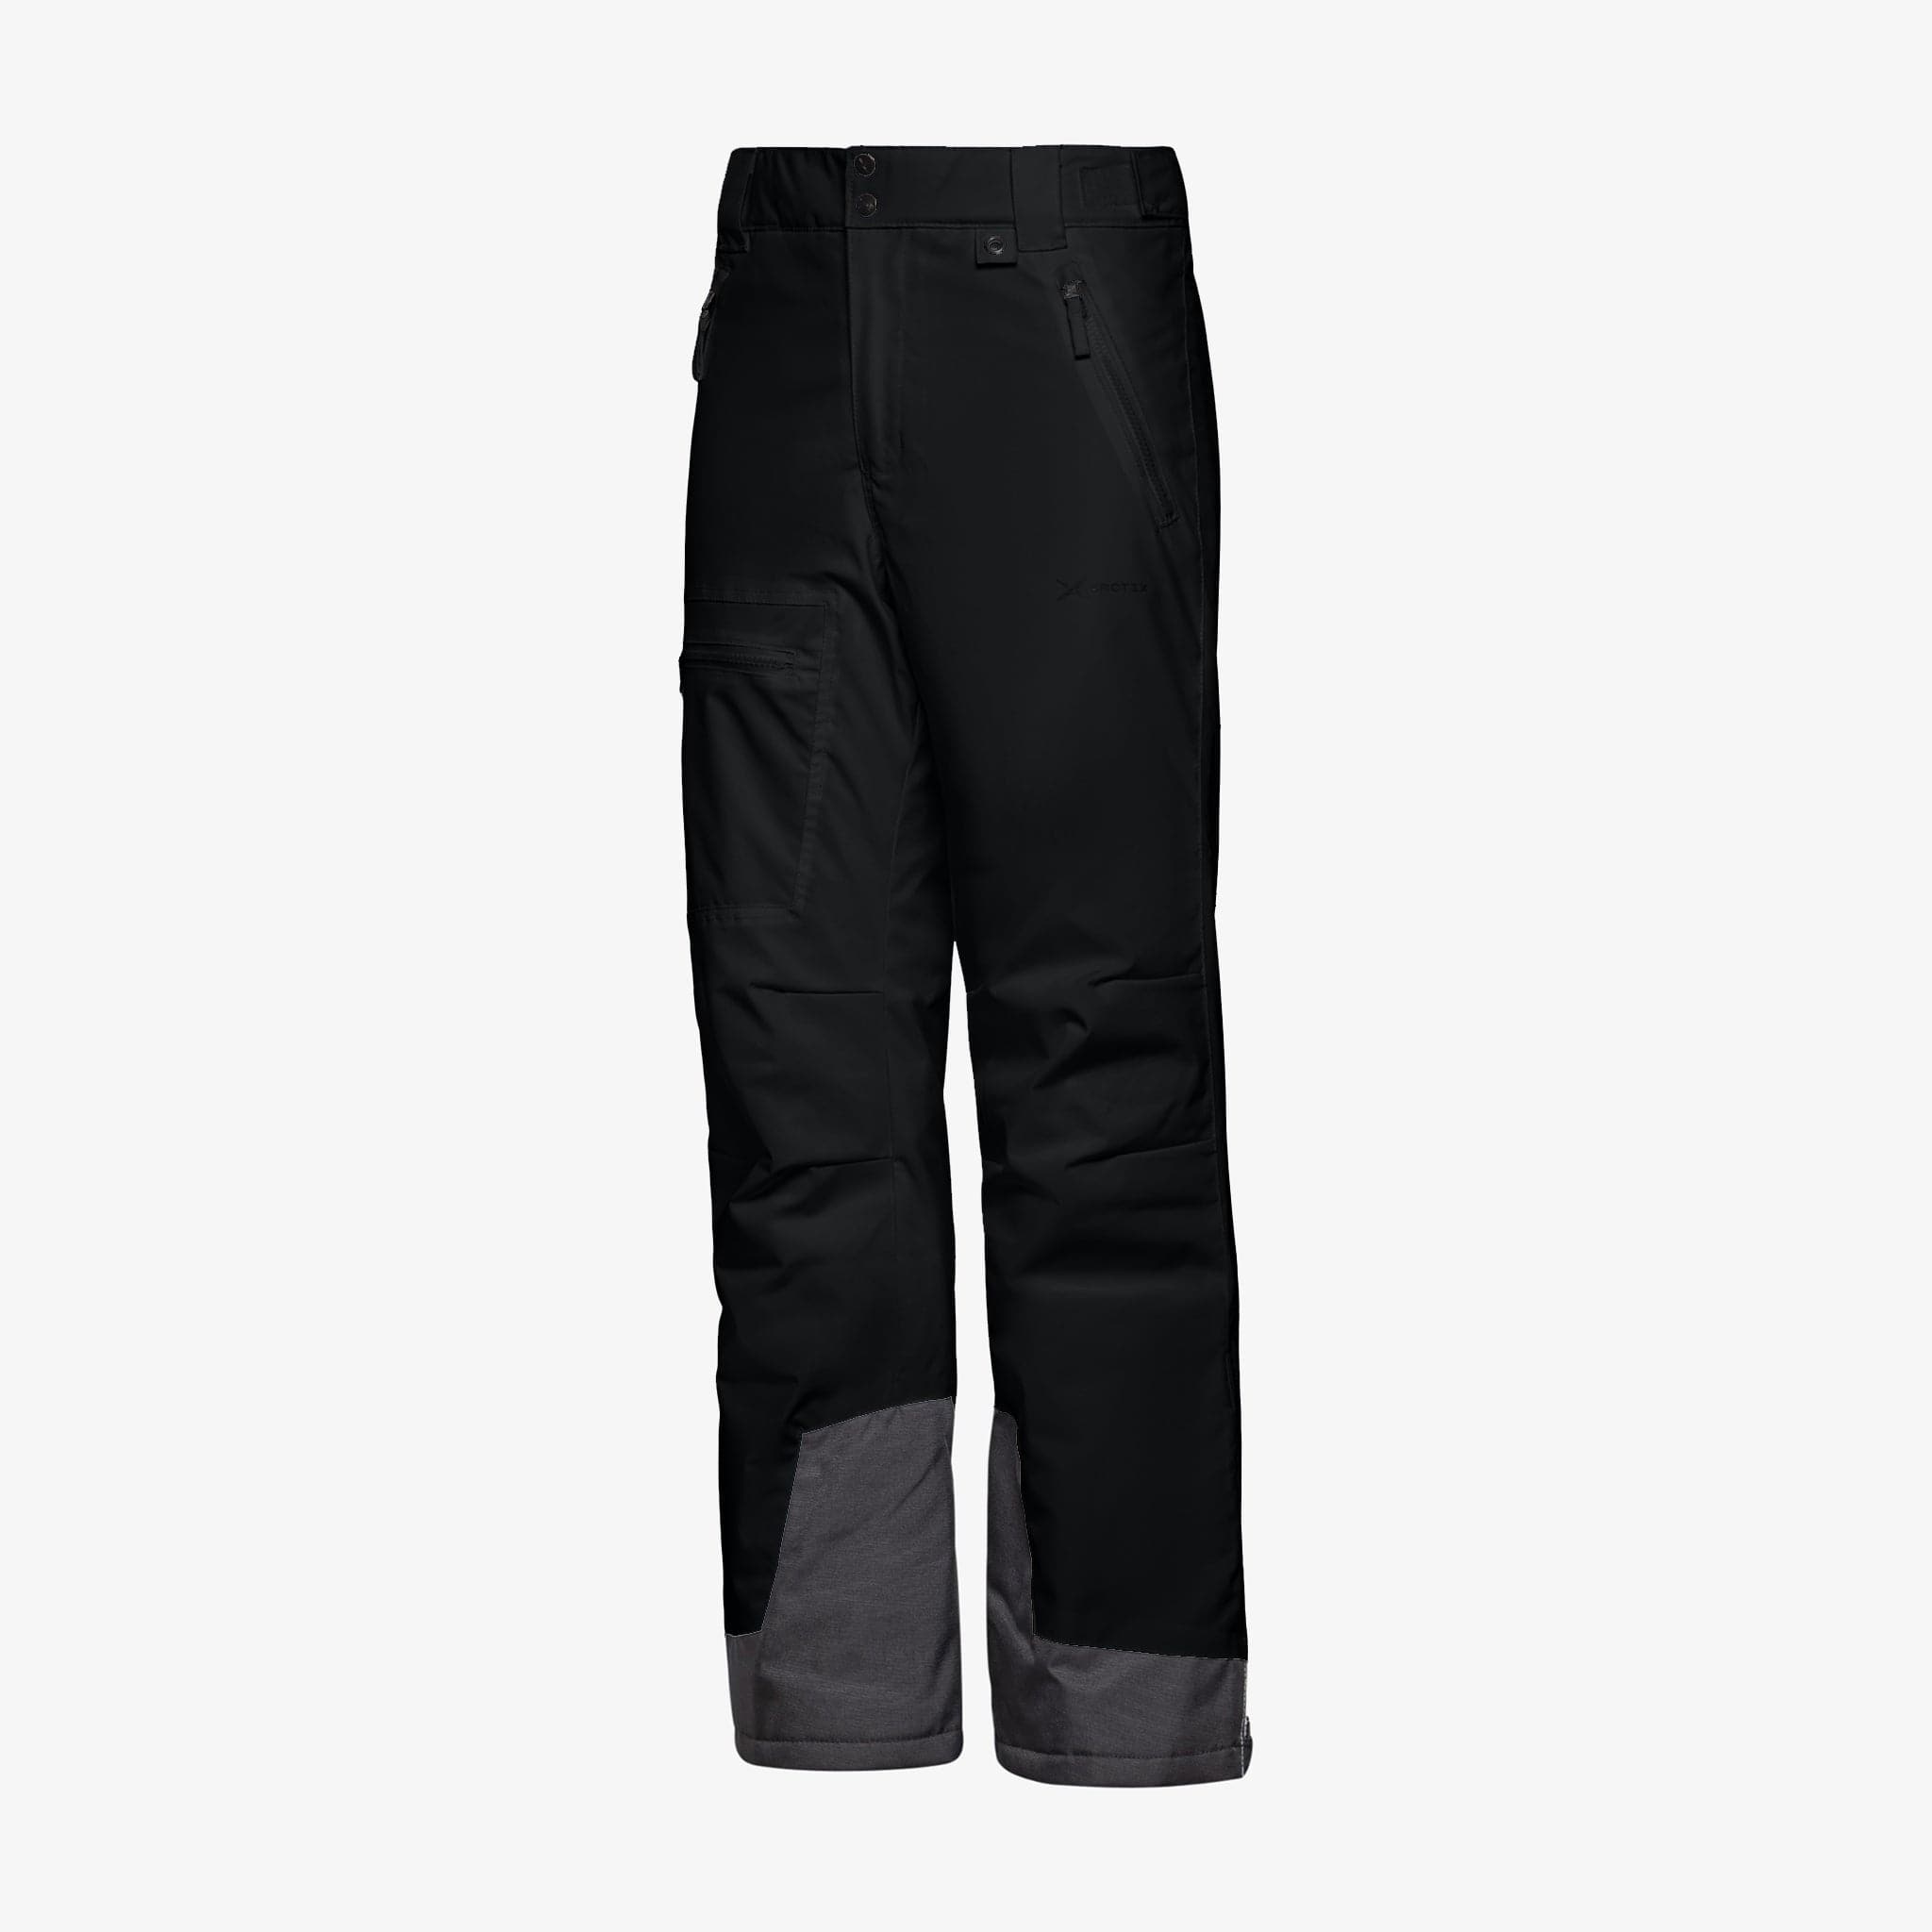 mens-insulated-ski-pants